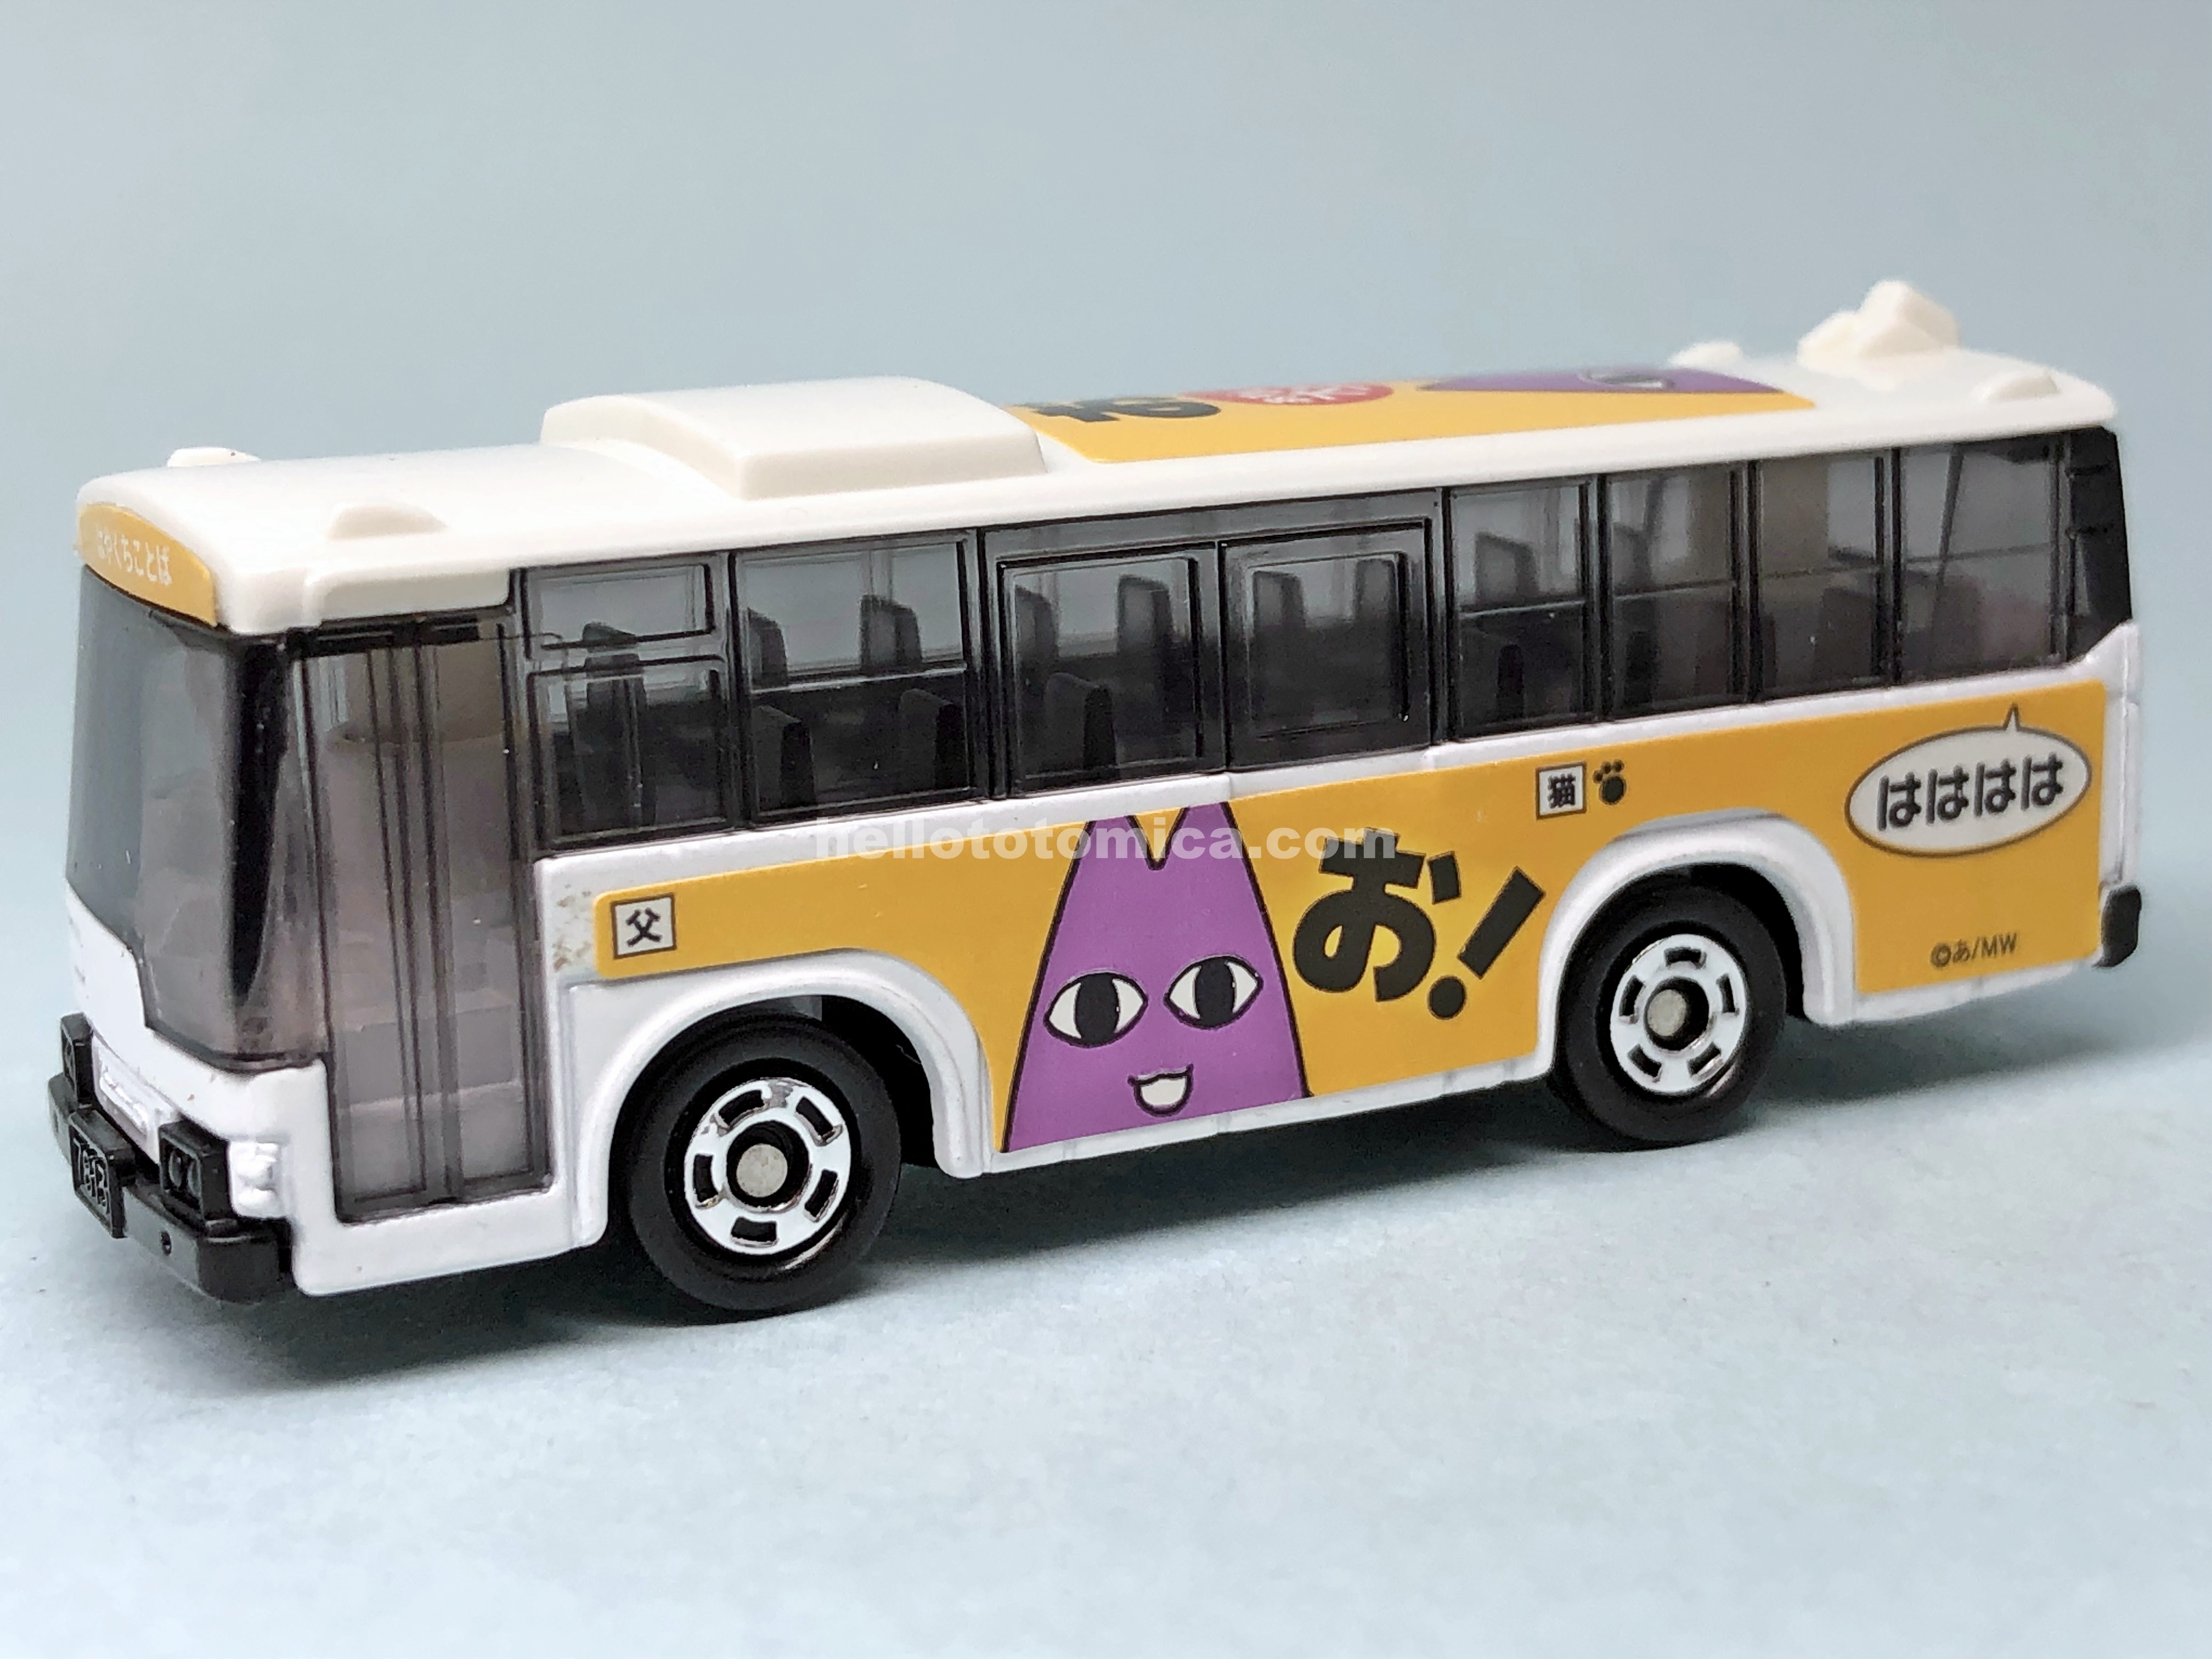 79-3 MITSUBISHI FUSO ONE-MAN OPERATED BUS